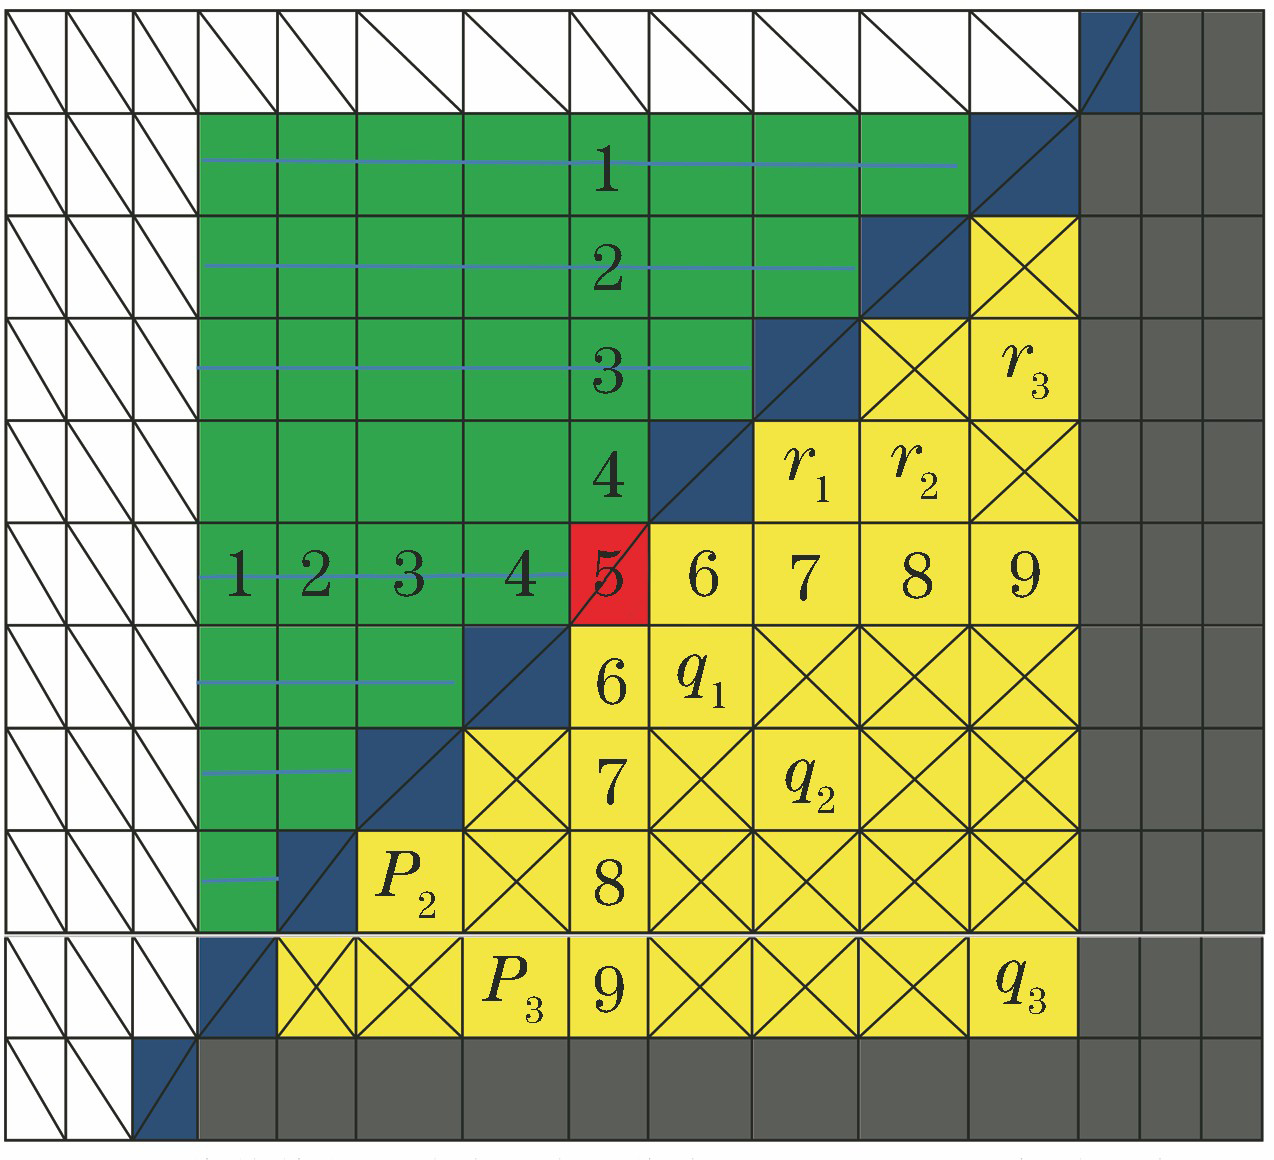 9 pixel×9 pixel neighborhood schematic of central pixel of edge of image area to be repaired